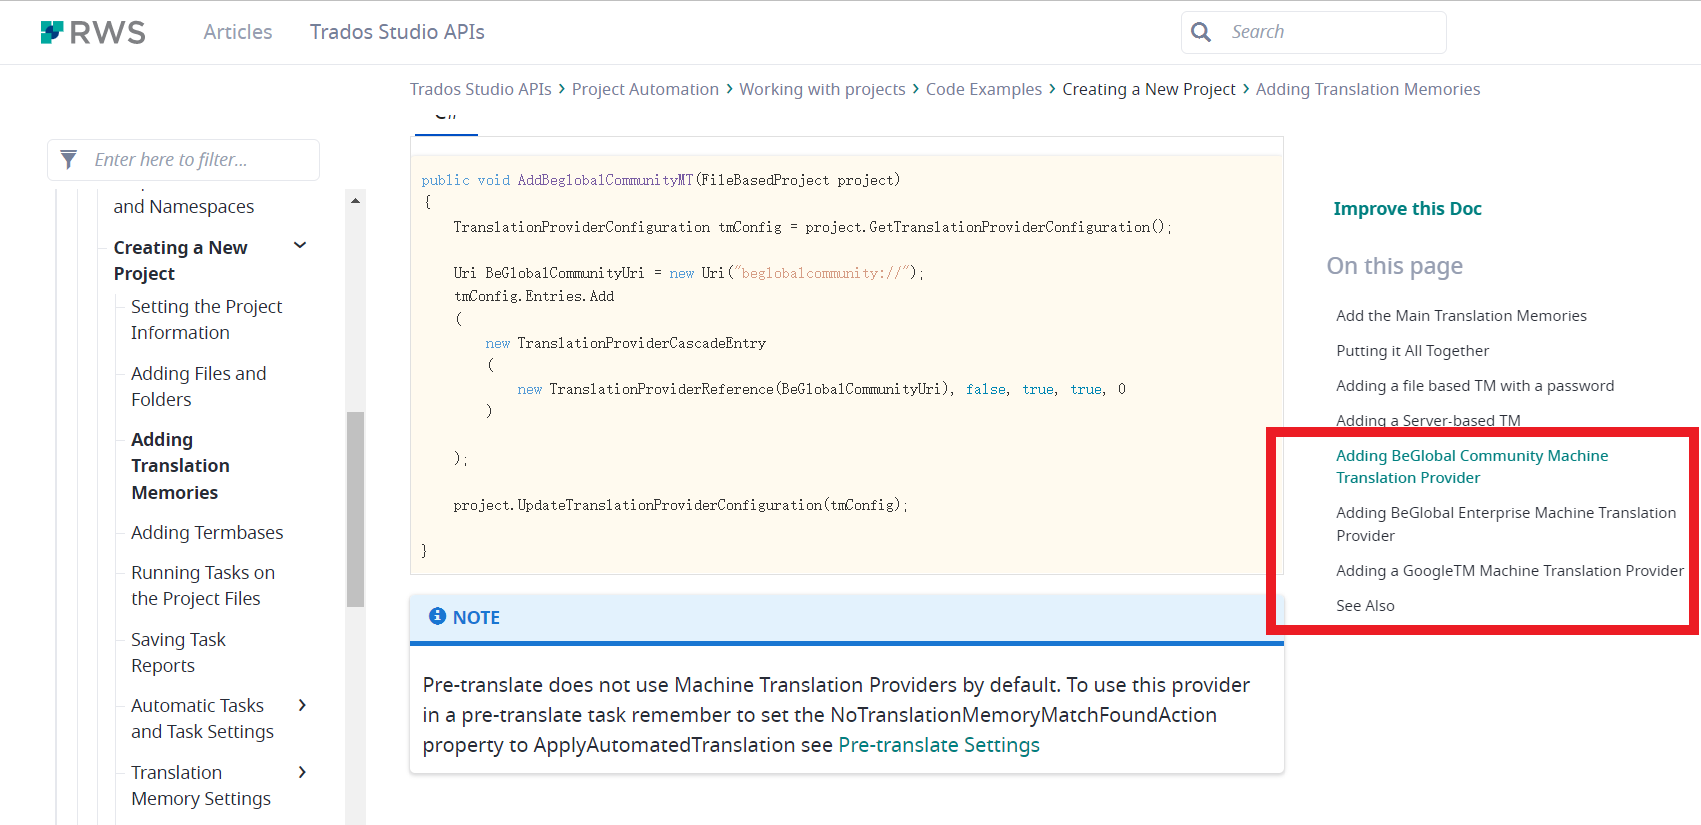 Screenshot of Trados Studio API documentation page showing code example for adding BeGlobal Community Machine Translation Provider.